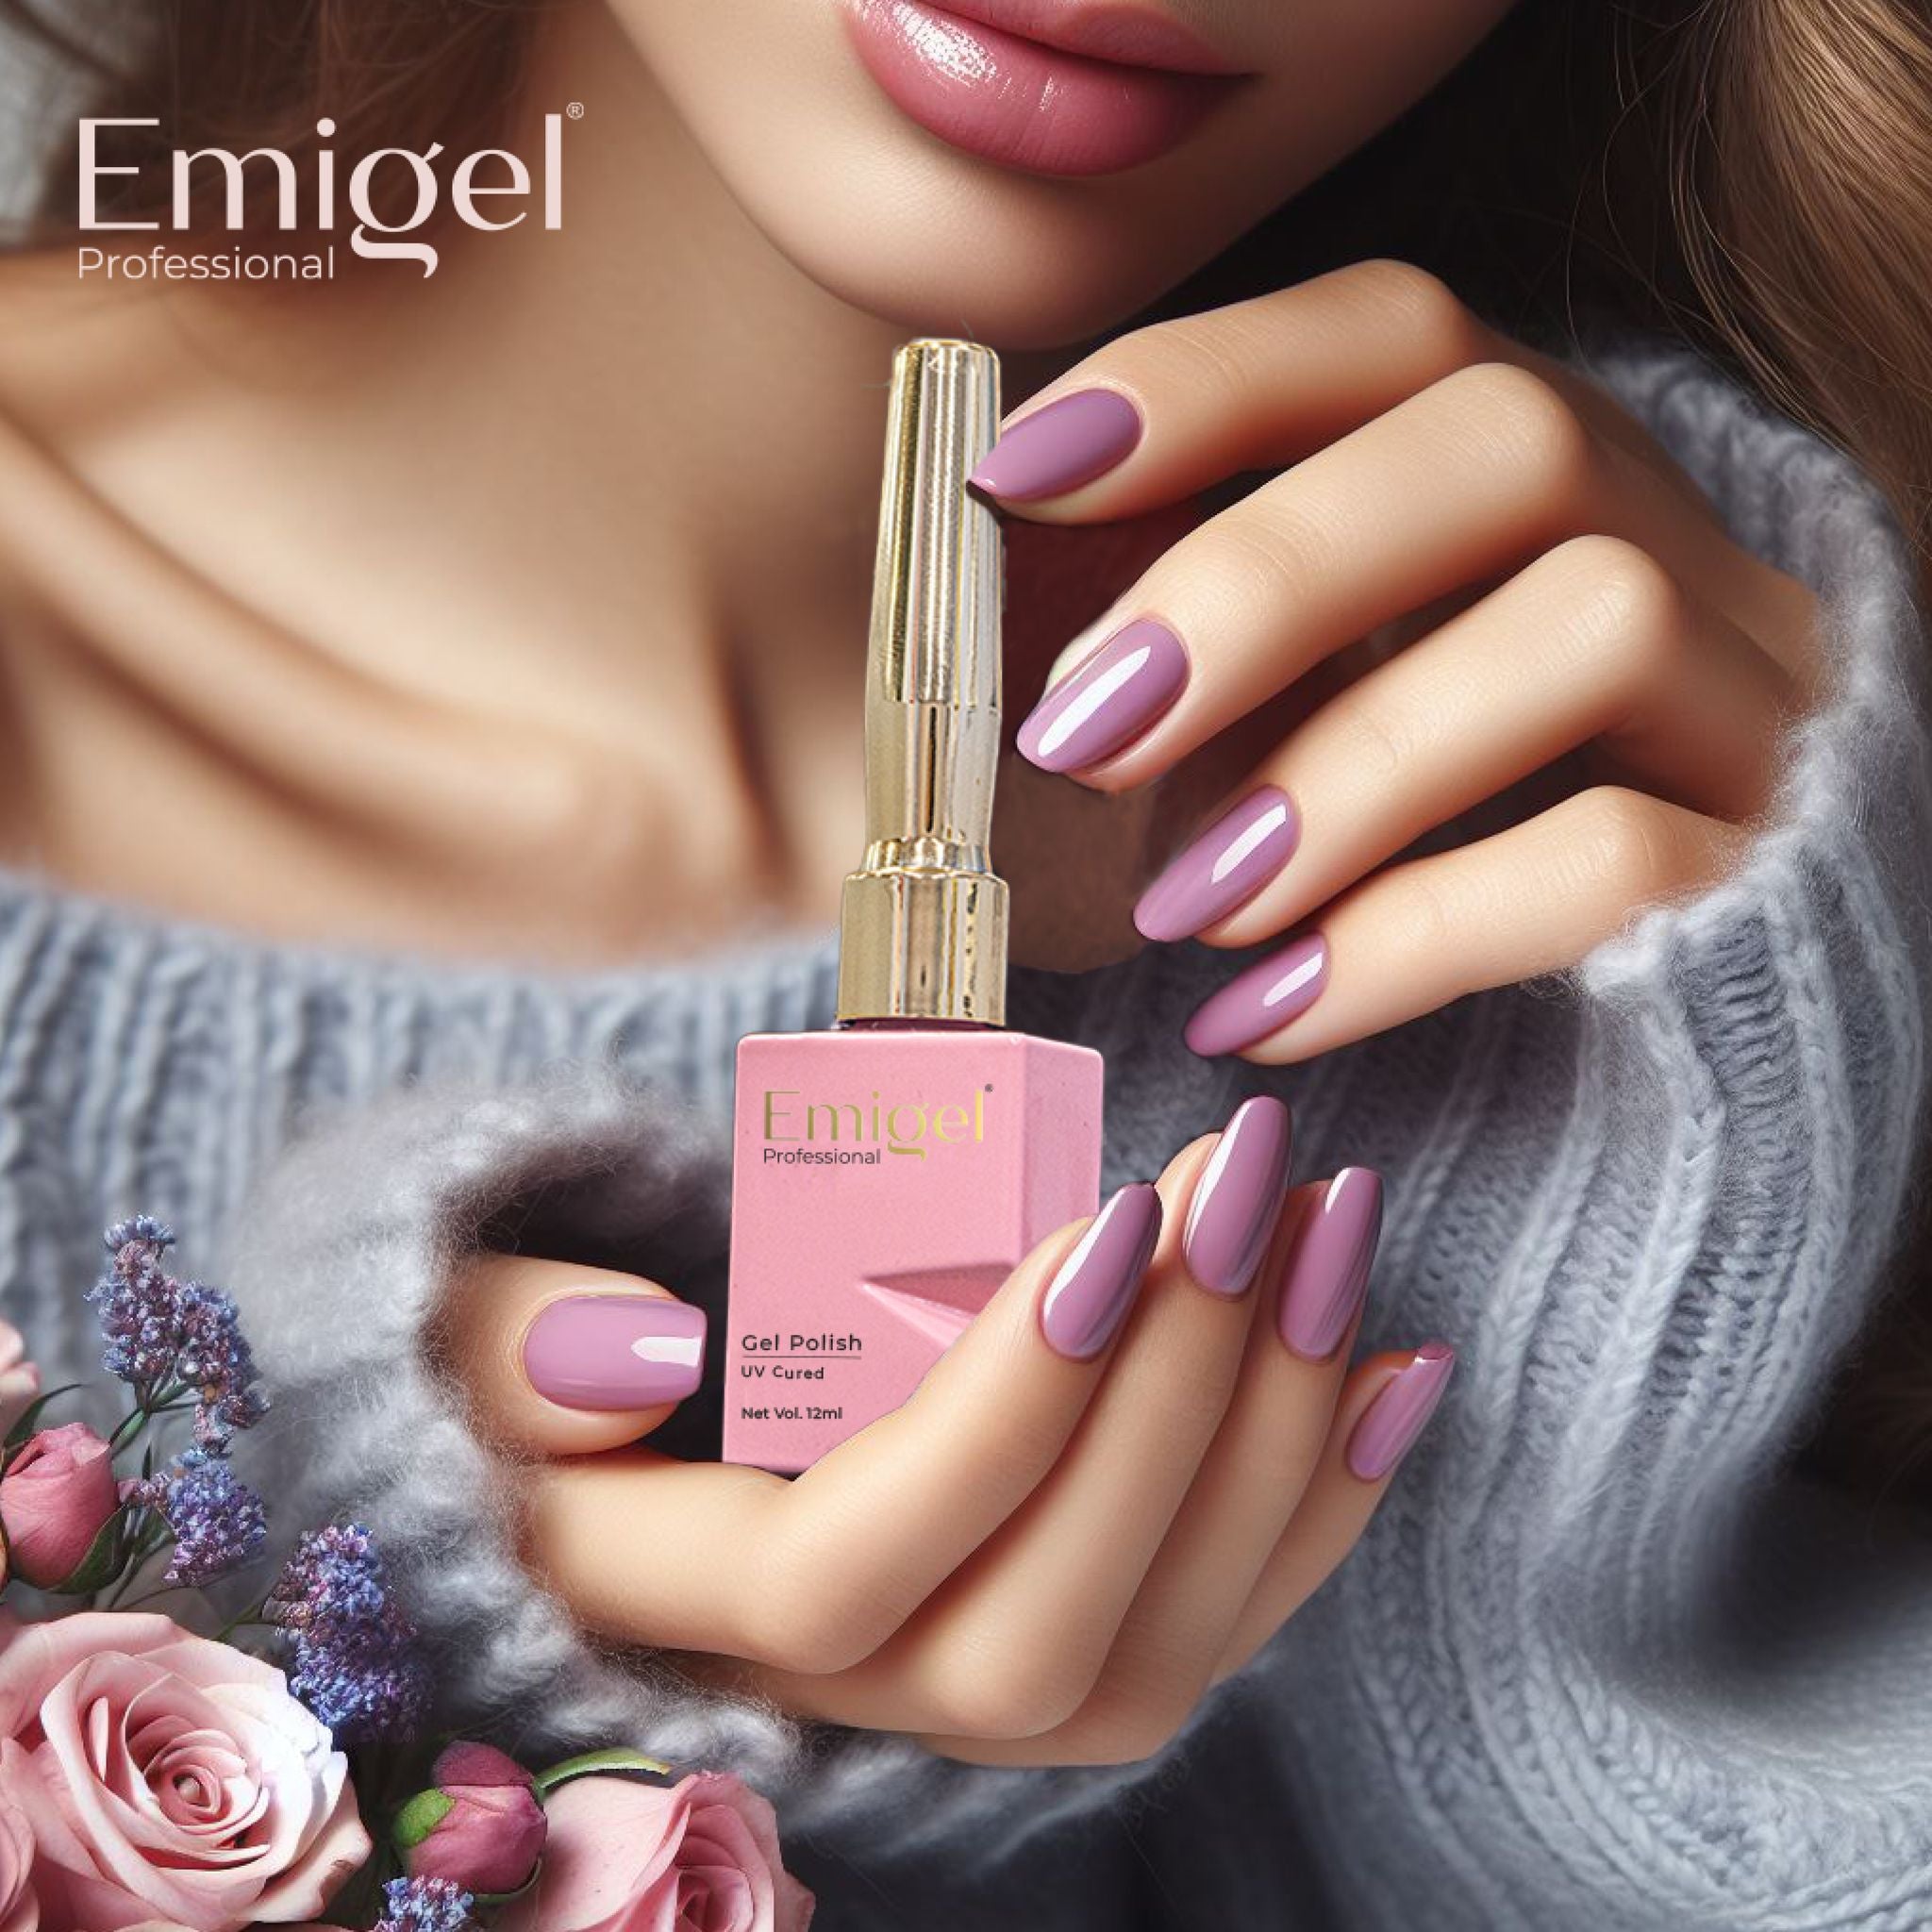 Emigel Professional - Nail Art & Extensions